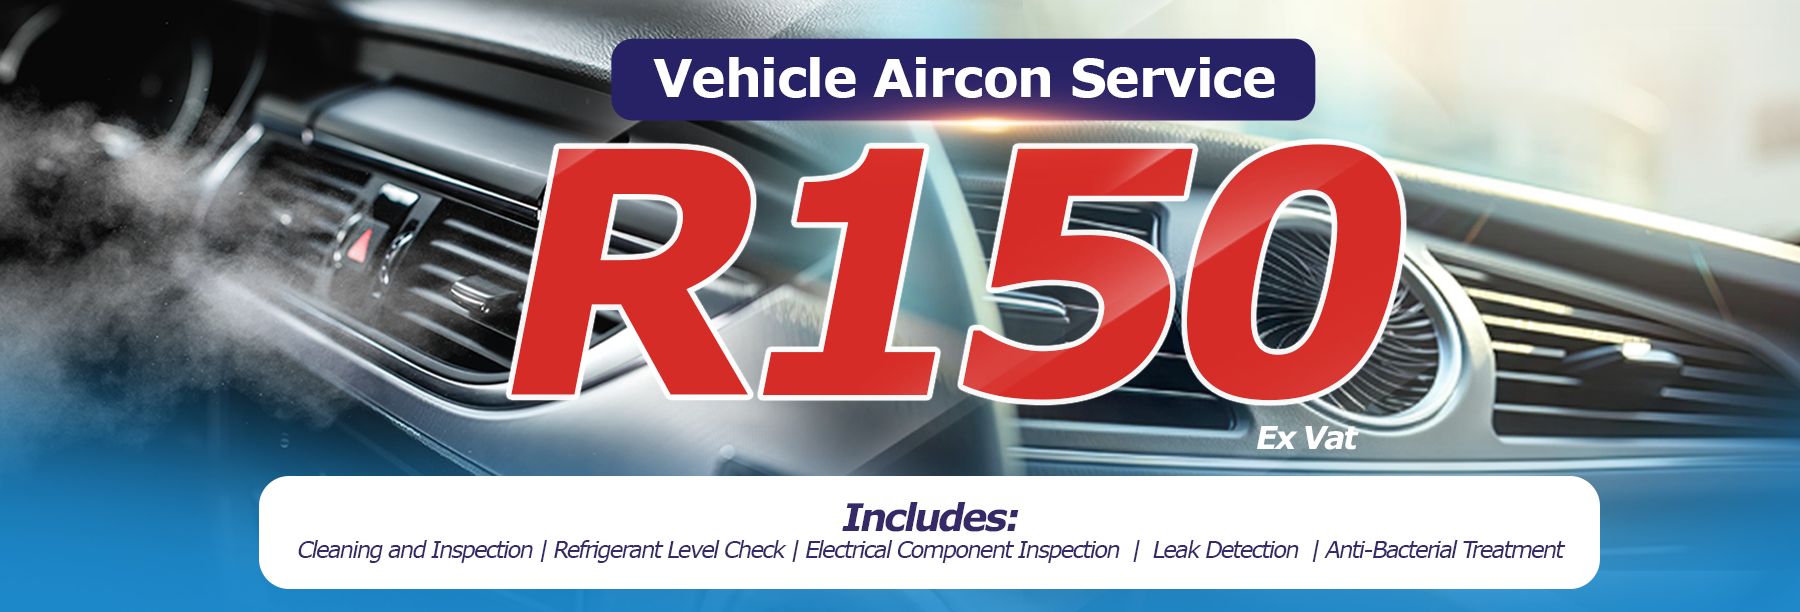 Vehicle Aircon Service